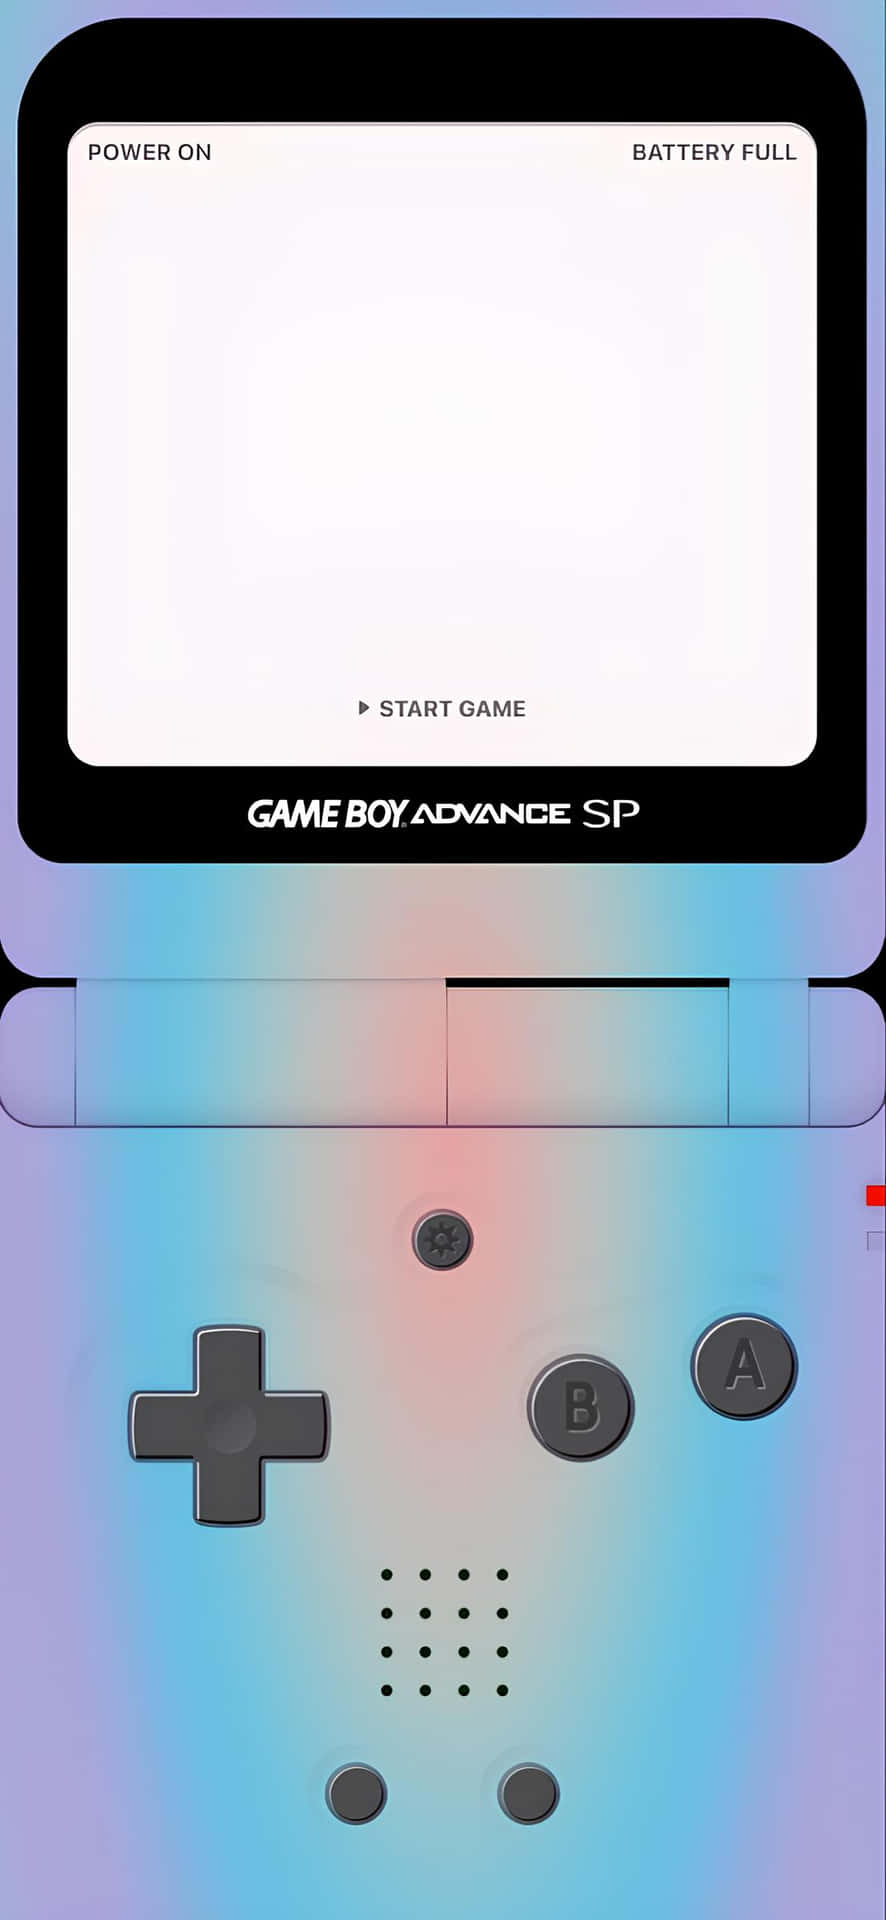 Gameboy Advance S Pi Phone Concept Wallpaper